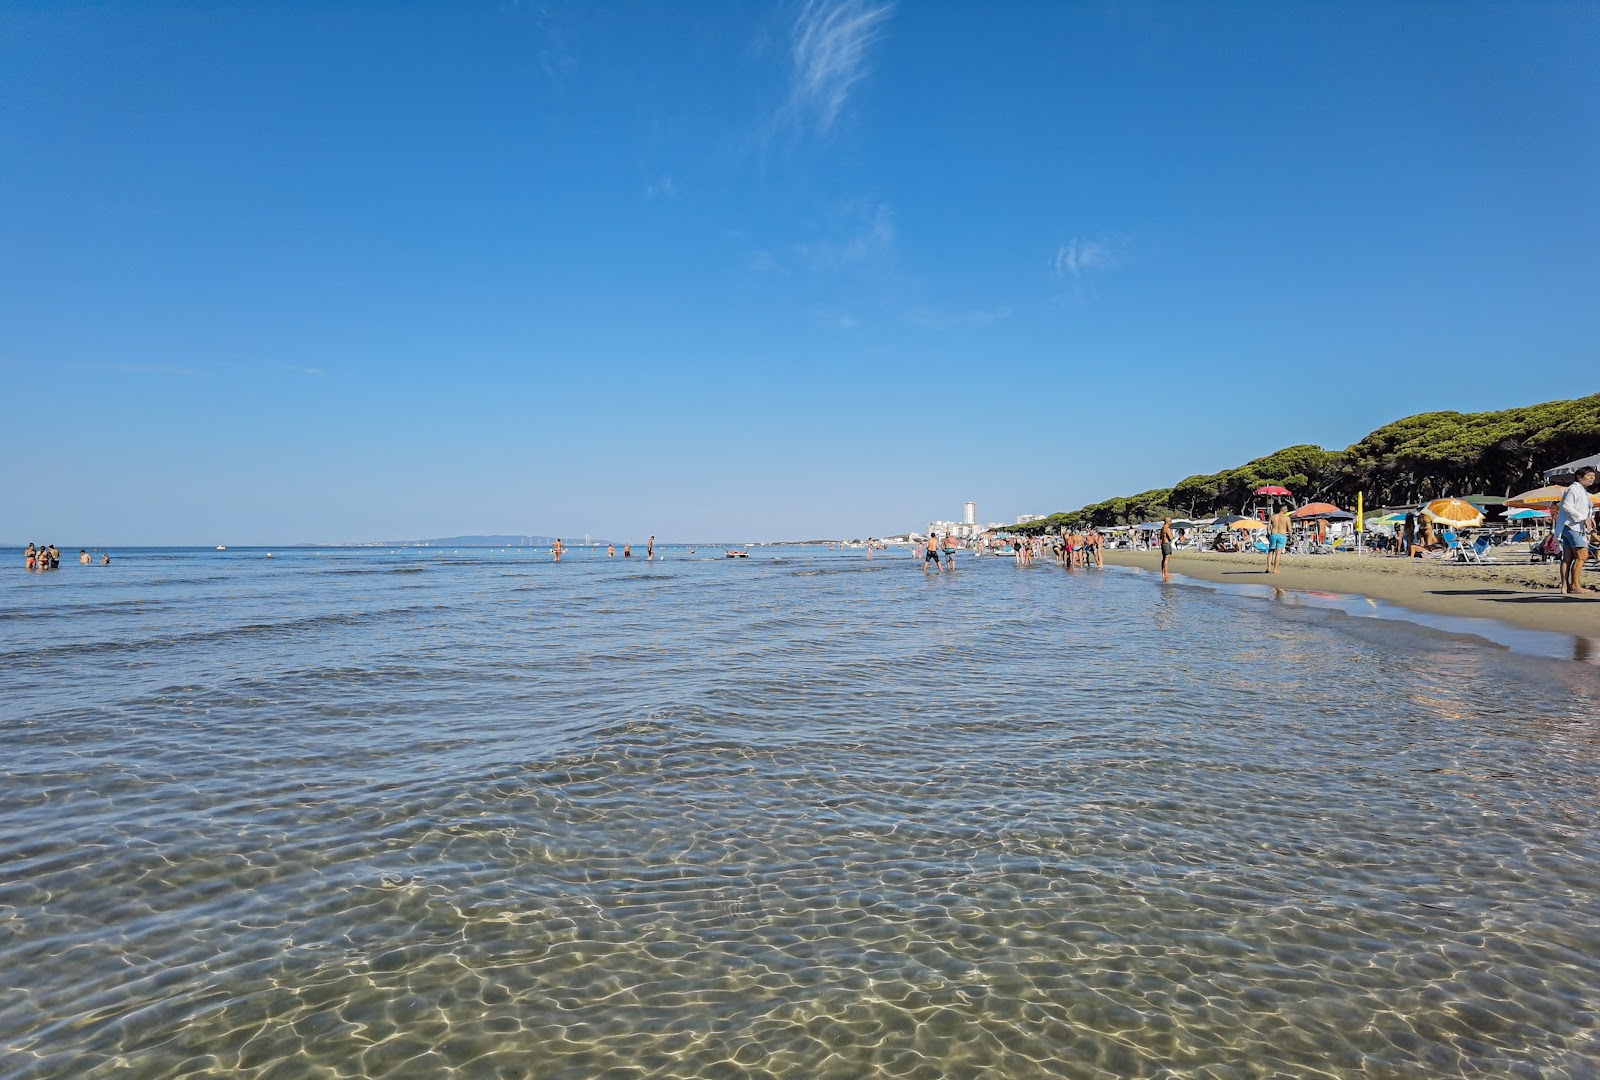 Foto von Spiaggia di Follonica mit heller sand Oberfläche